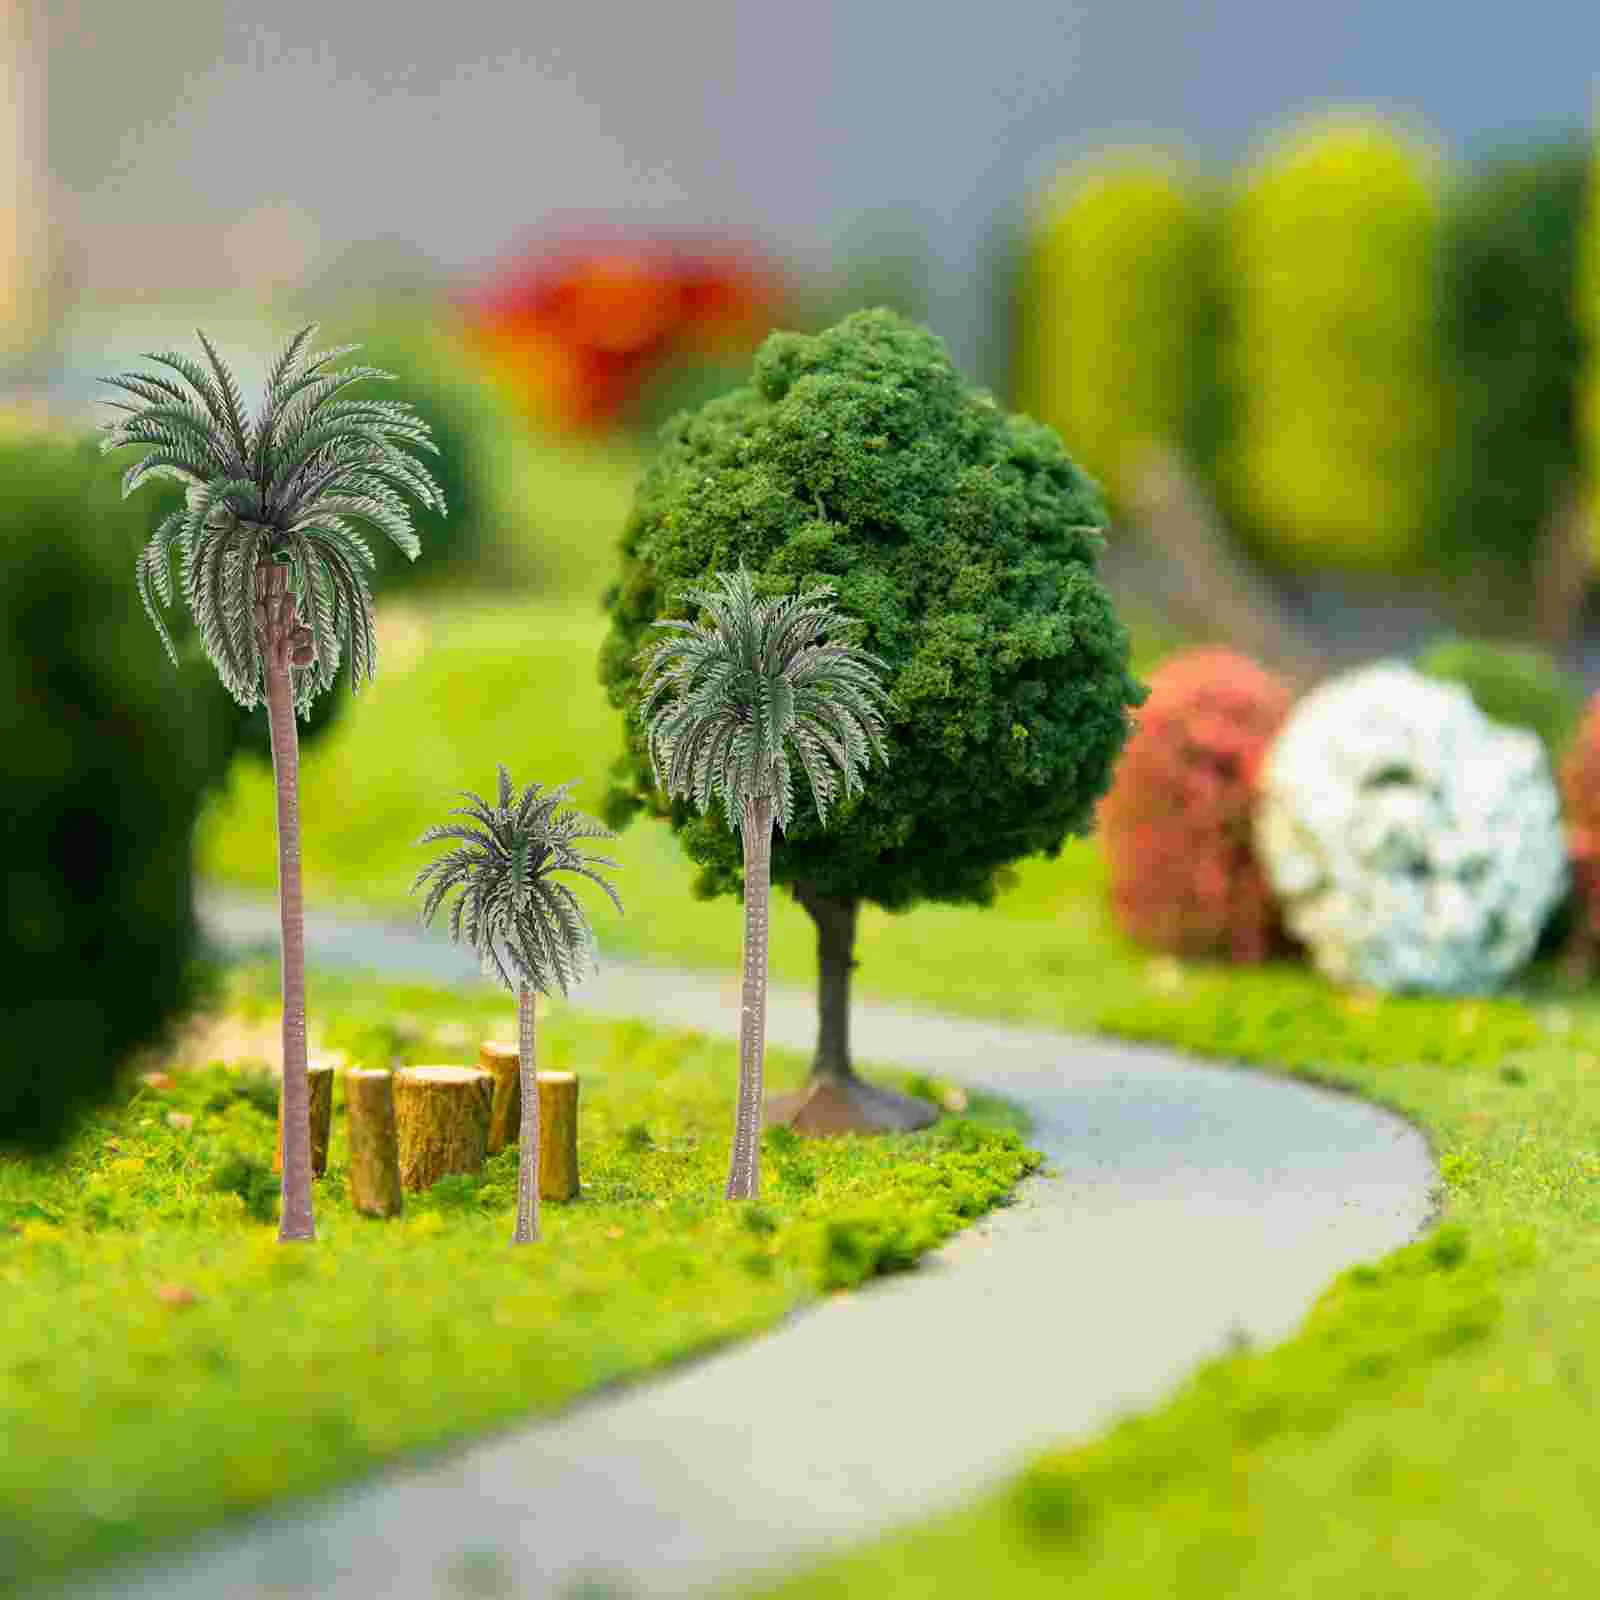 

Tree Model Trees Palm Landscape Train Scenery Mini Artificial Miniature Fake Architecture Diorama Models Figures Green Figurines